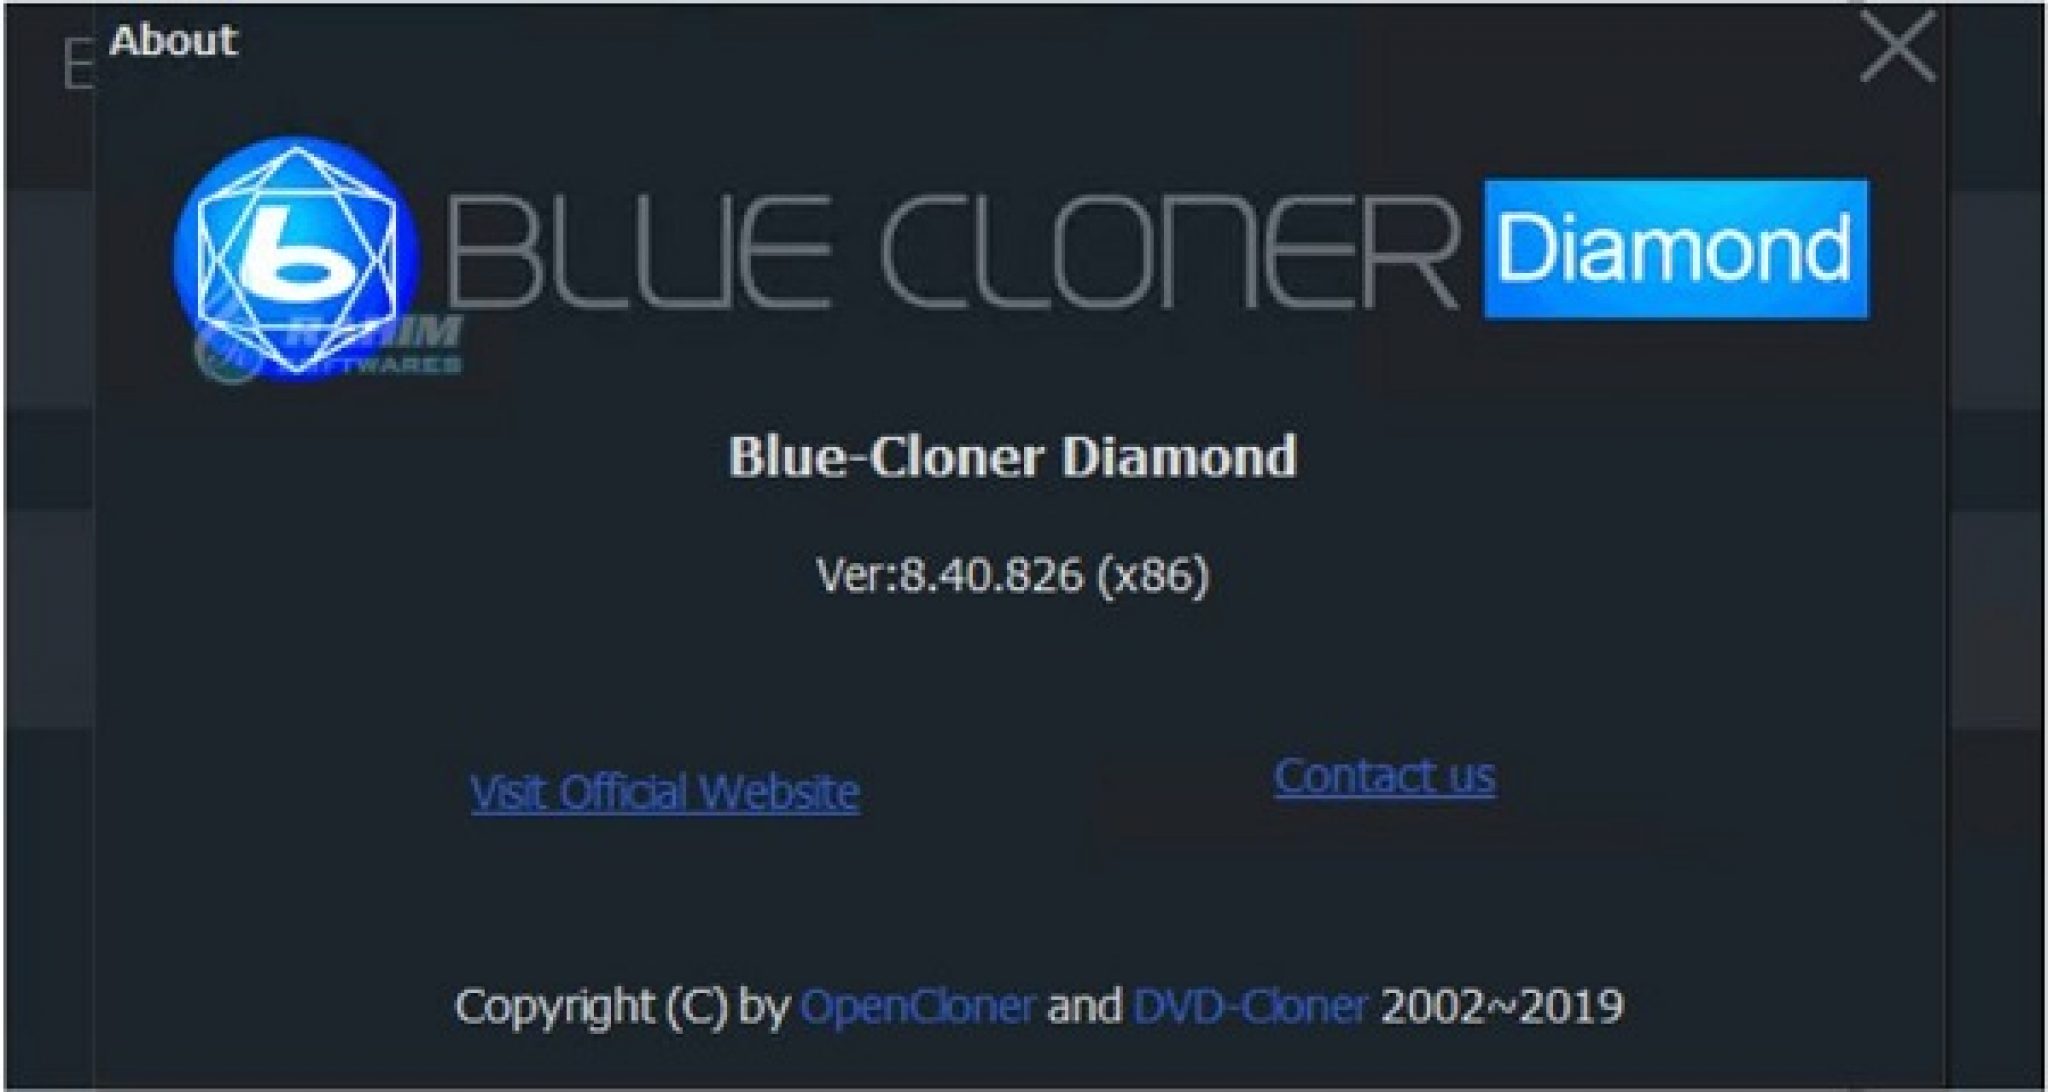 Blue-Cloner Diamond 12.20.855 download the new